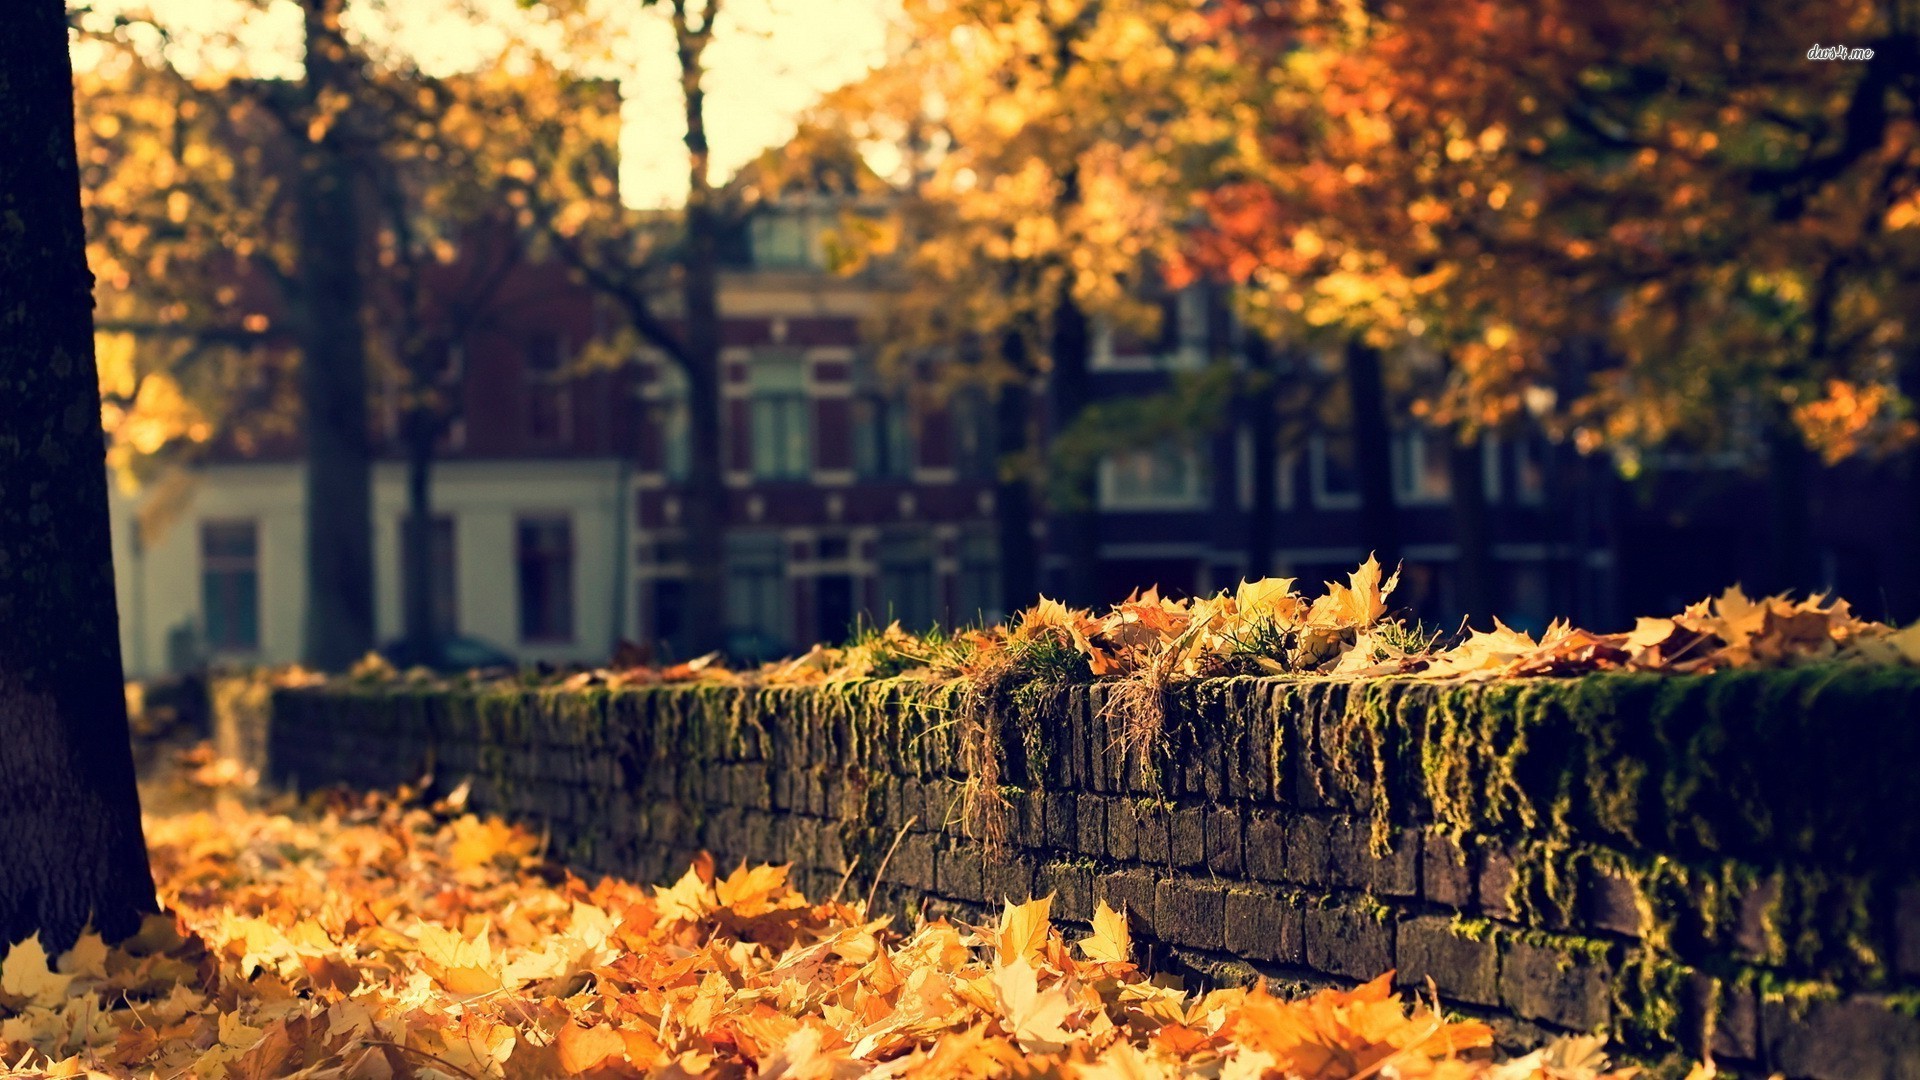 autumn background wallpaper